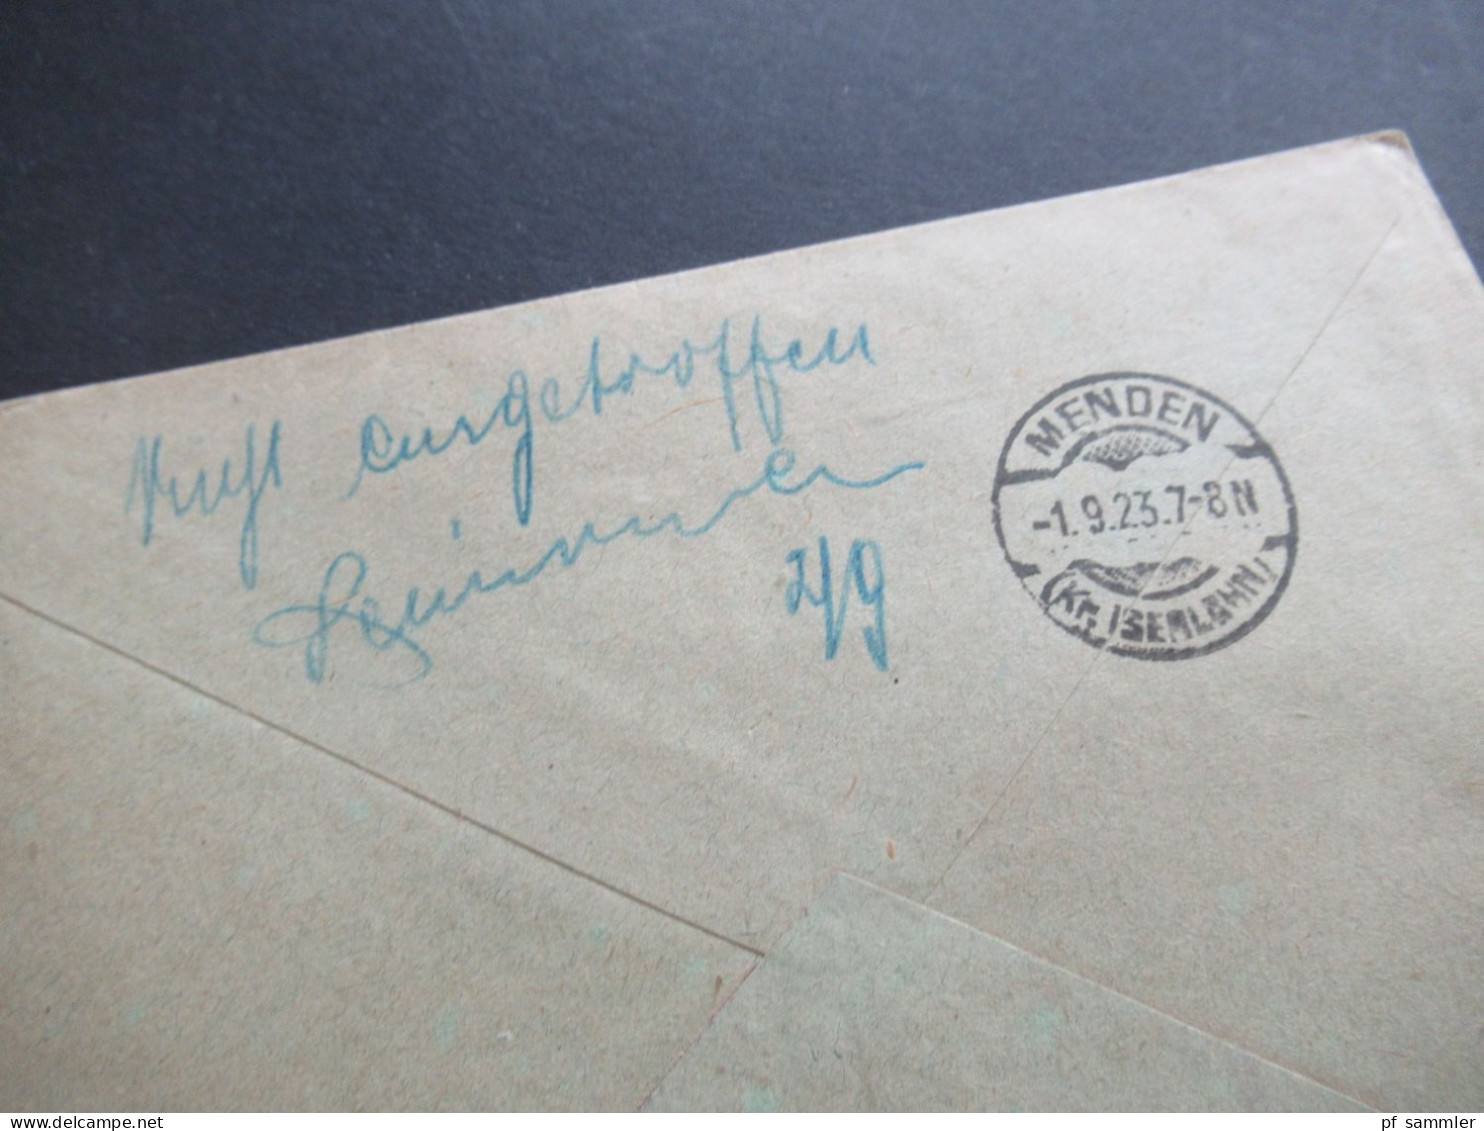 9.1923 Infla Notmaßnahme Porto Handschriftlich Roter Ra2 Gebühr Bezahlt Taxe Percue Einschreiben Iserlohn - Menden - Covers & Documents